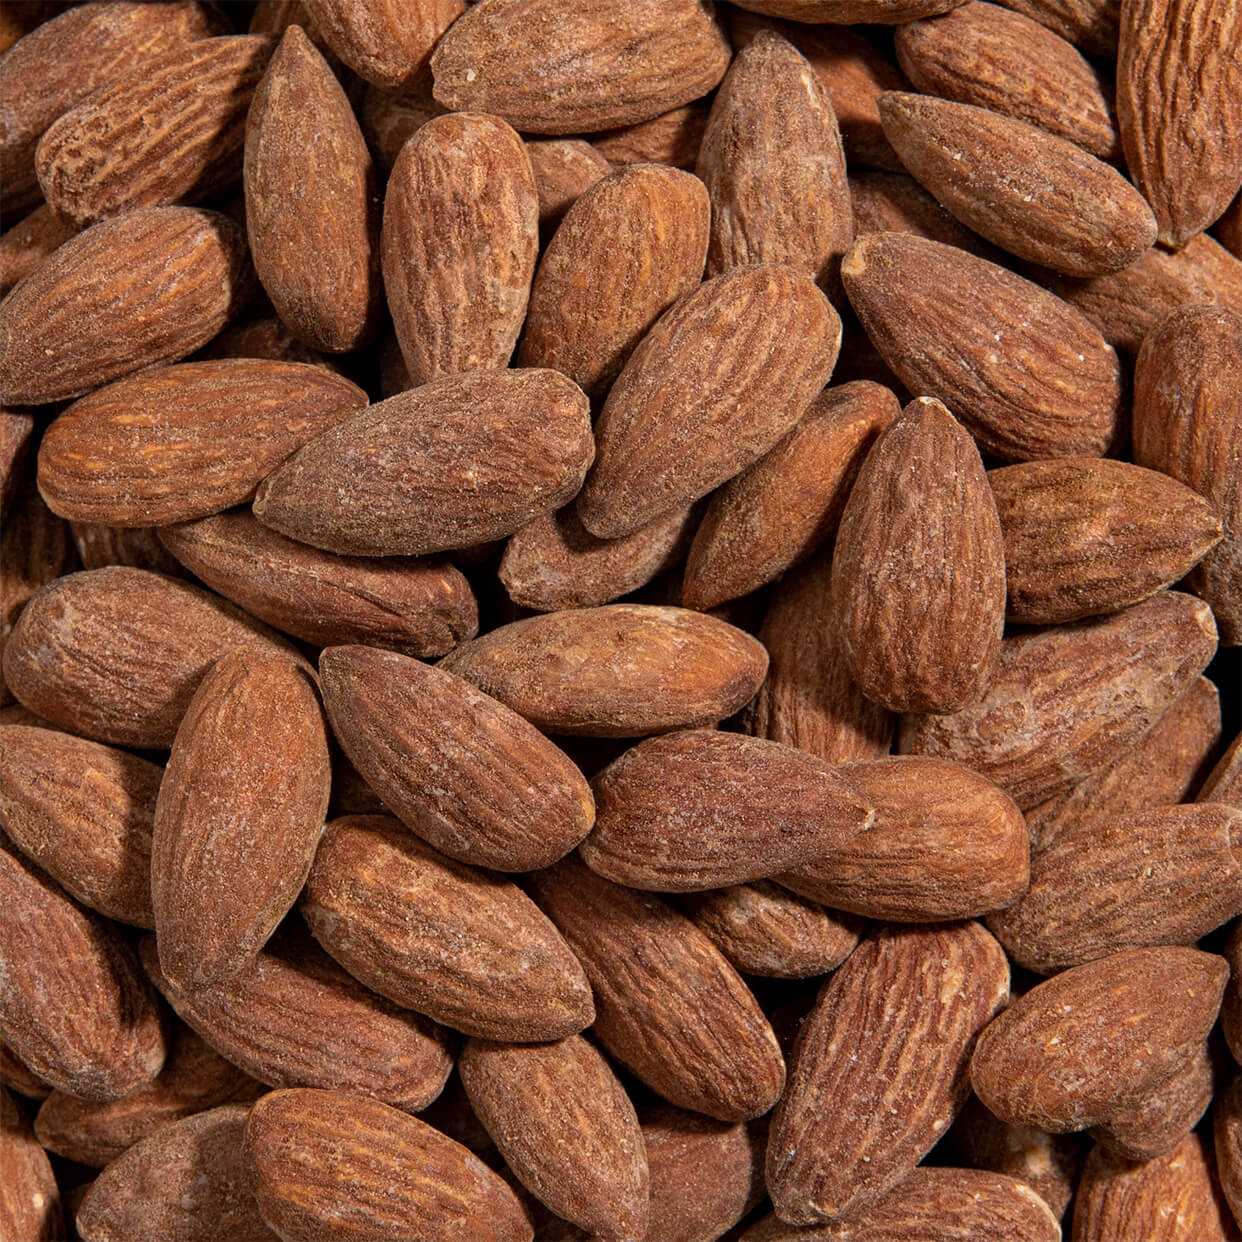 Select Harvest almonds